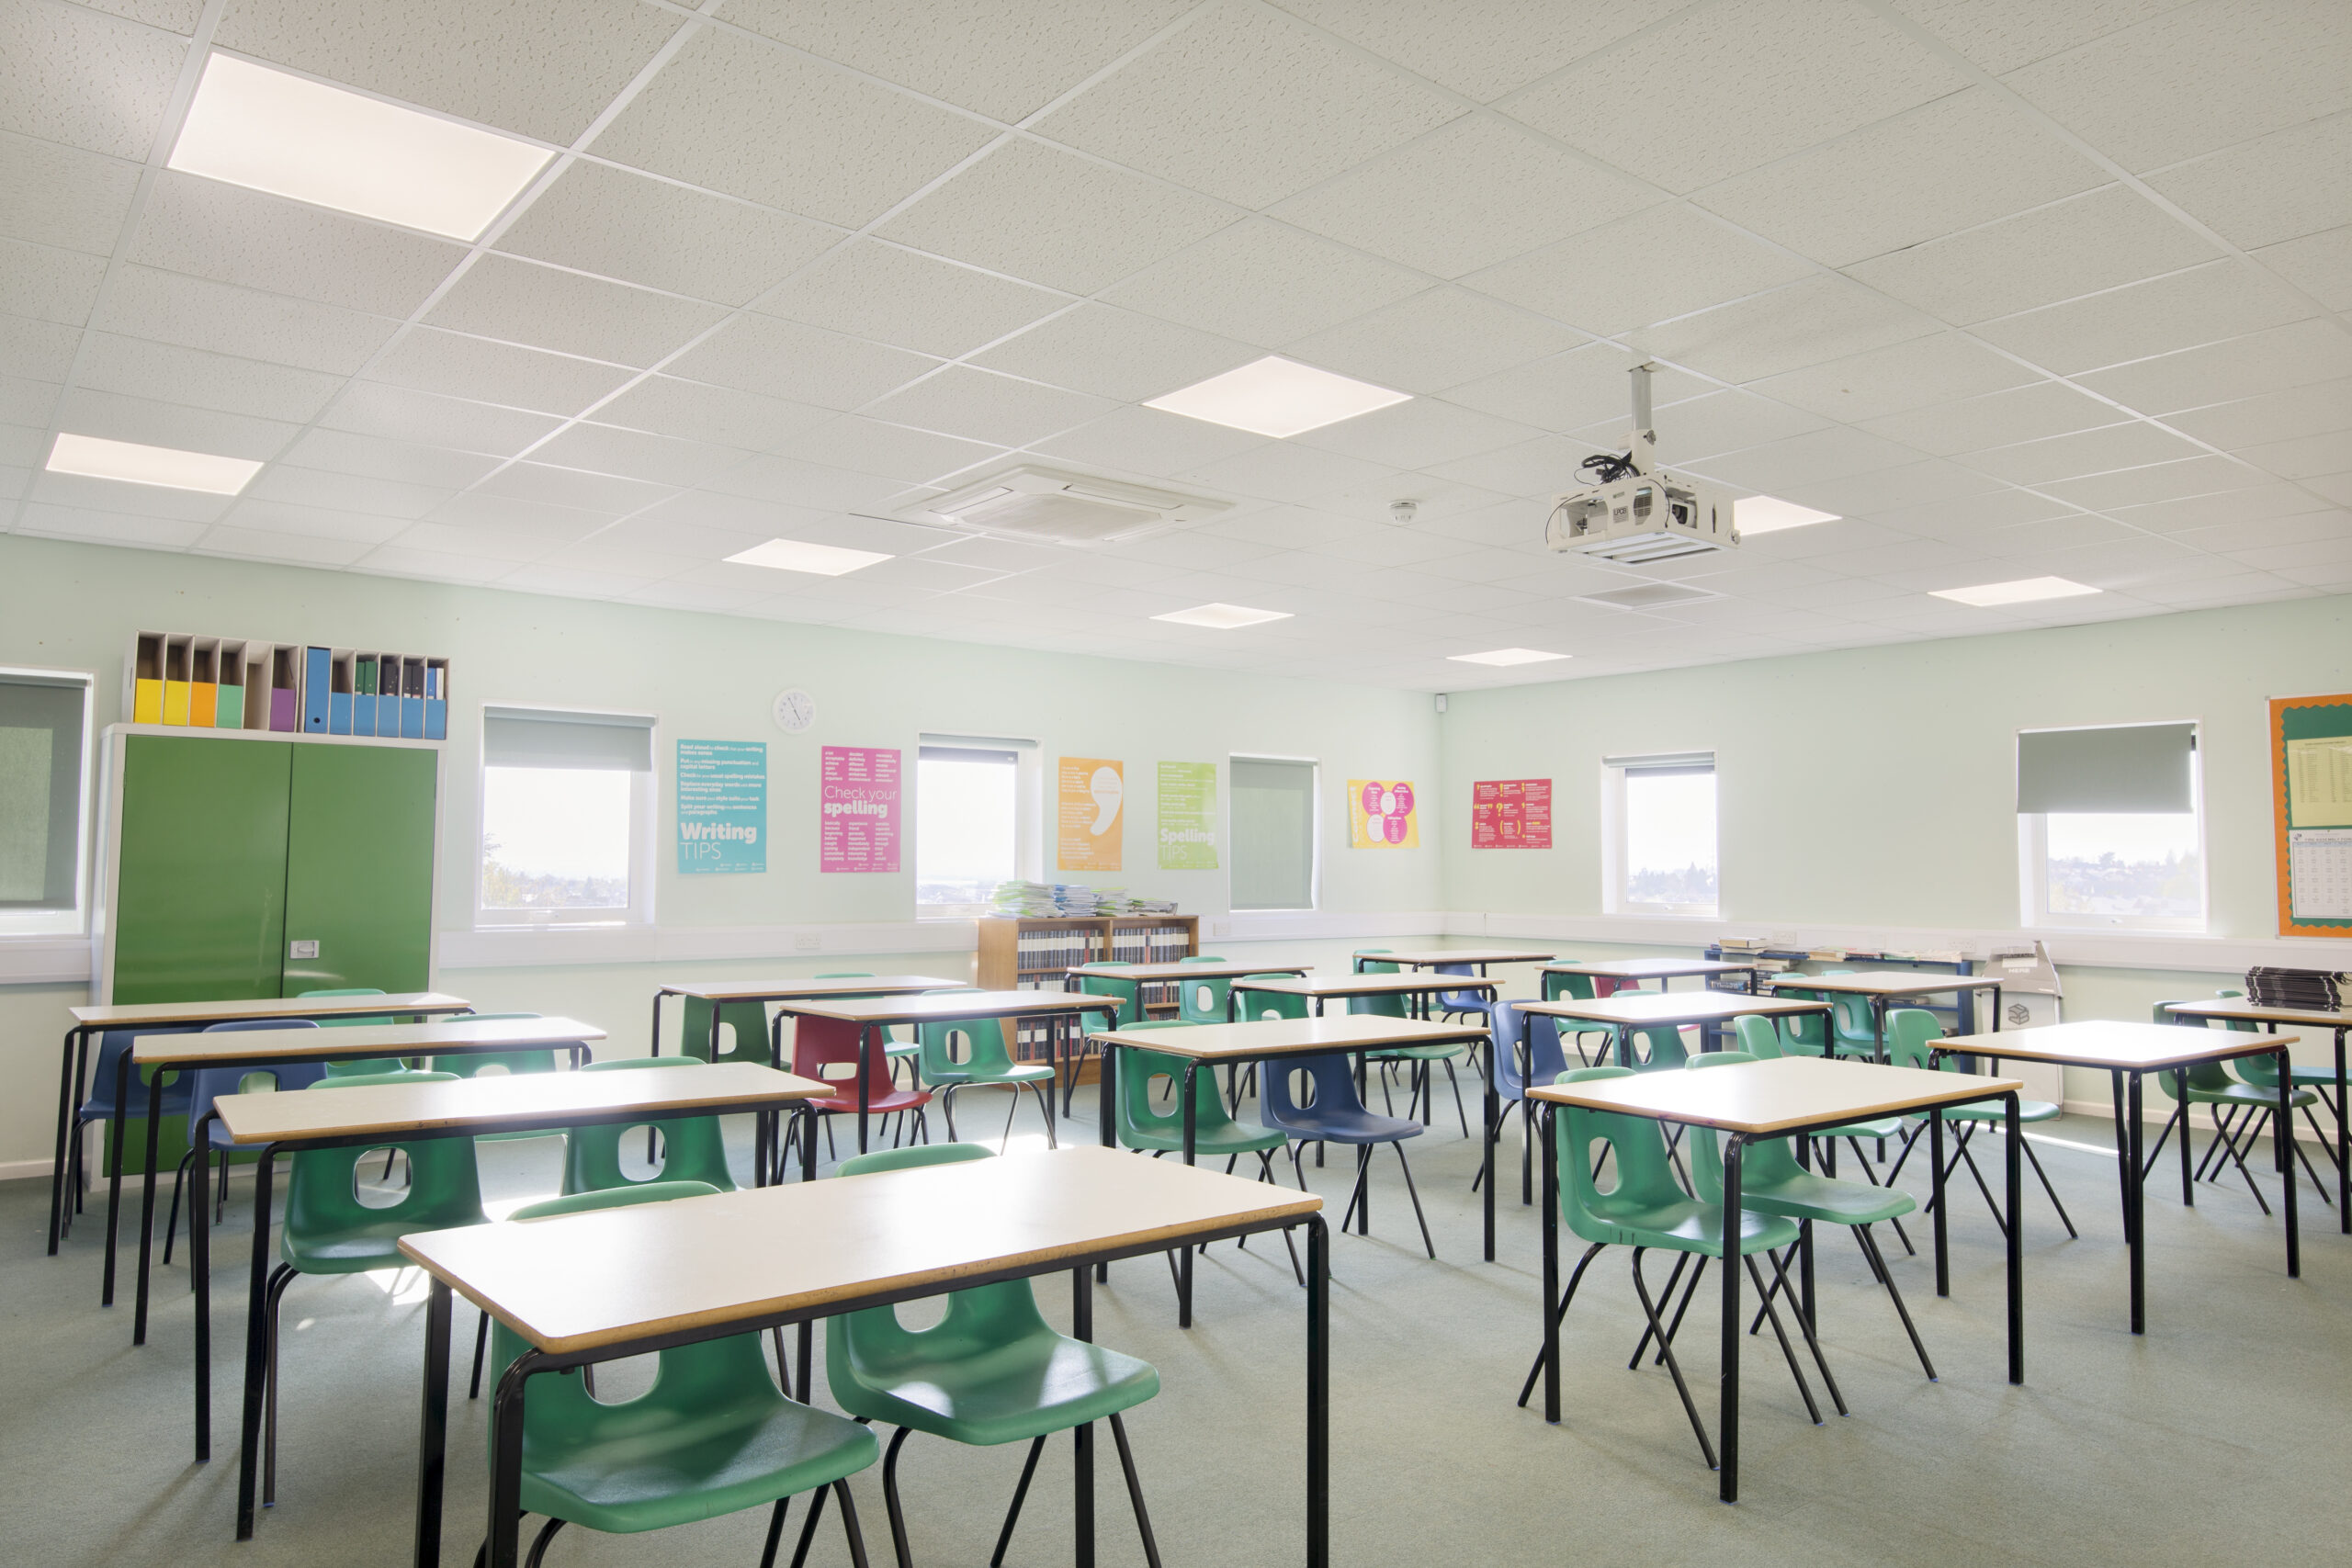 Tamlite Hastings High School Hinkley Education LED lighting case study classroom image